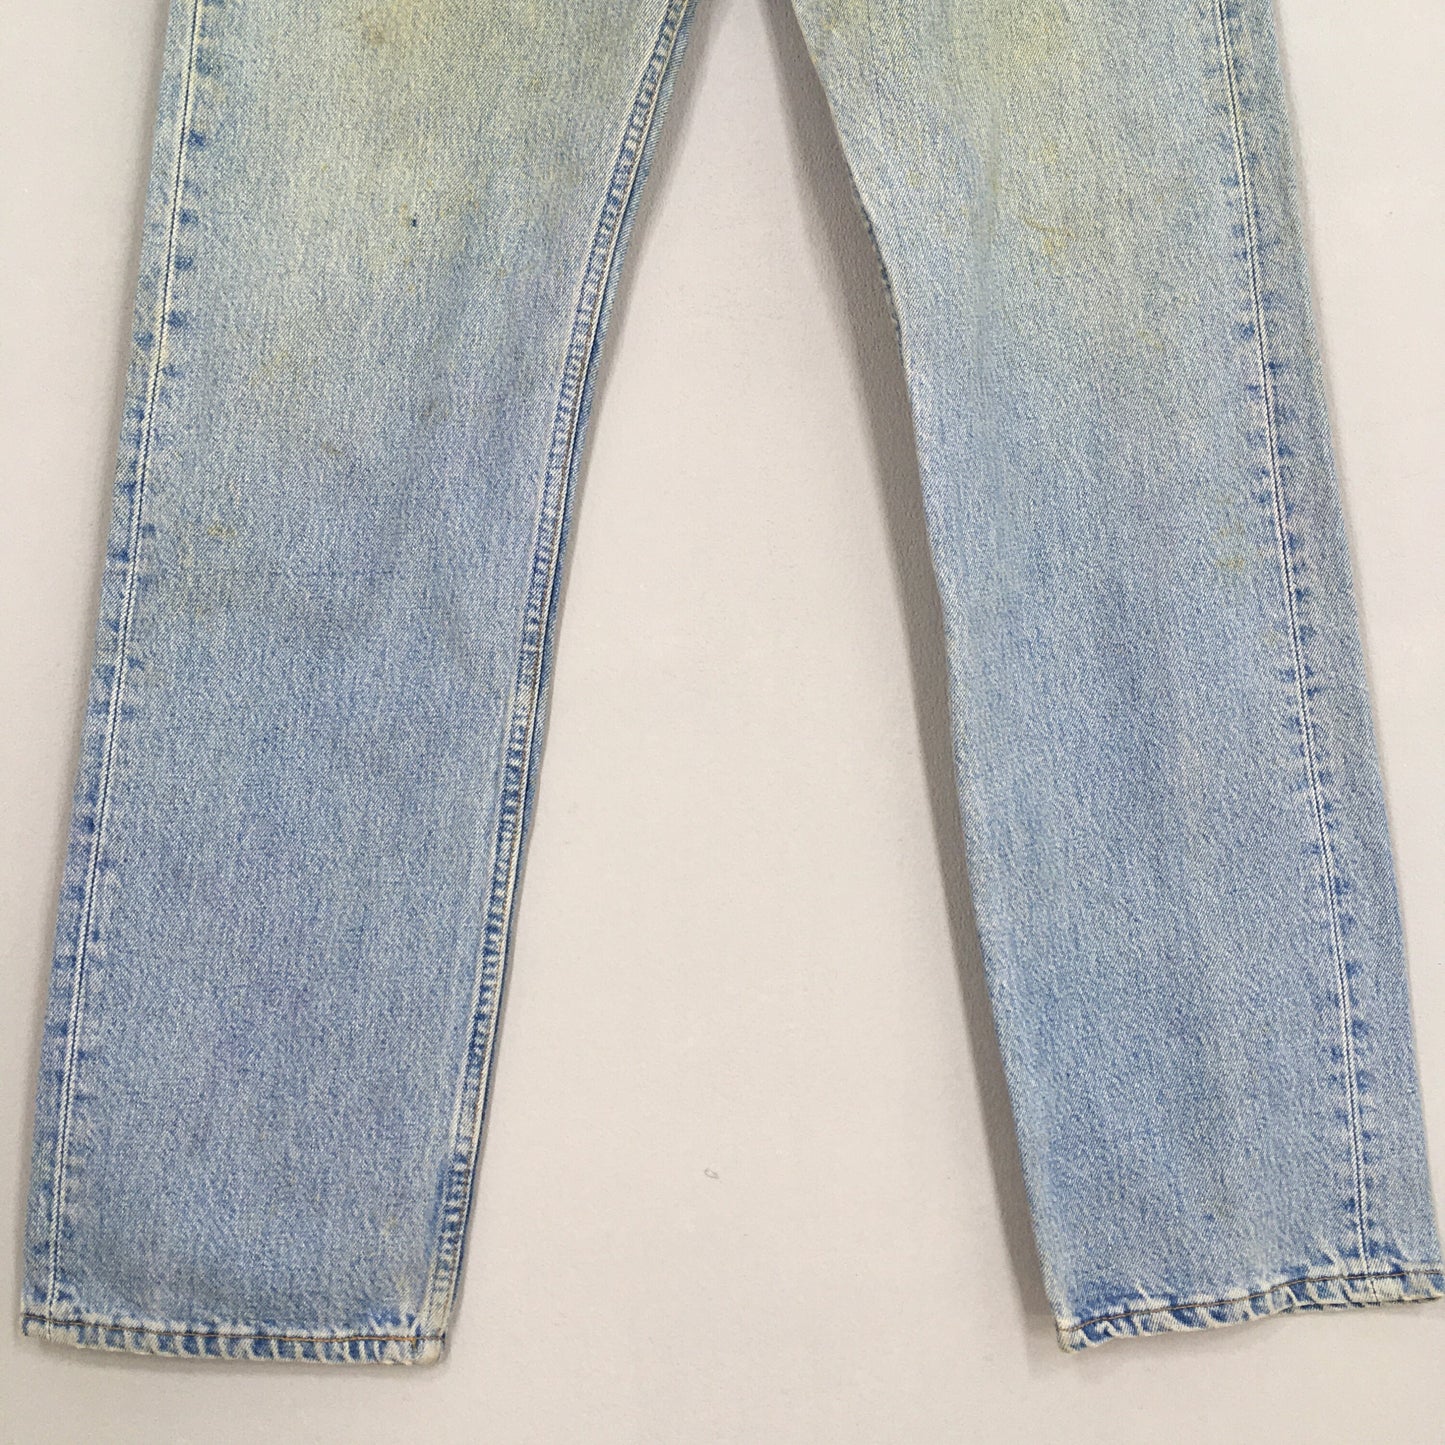 Levi's 501 Faded Dirty Jeans Stonewash Size 31x31